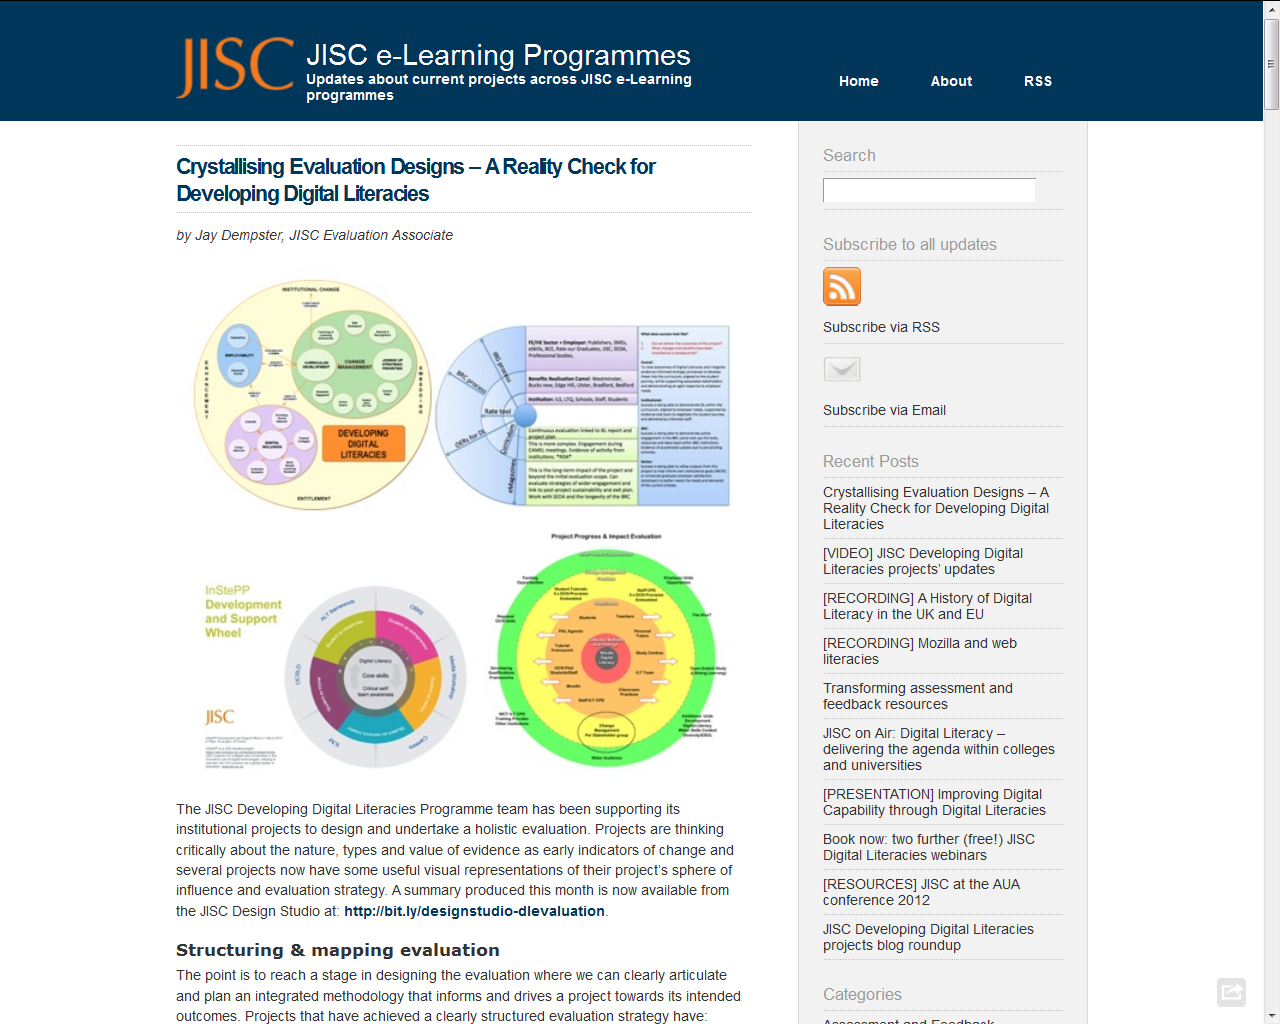 JISC e-Learning programmes blog